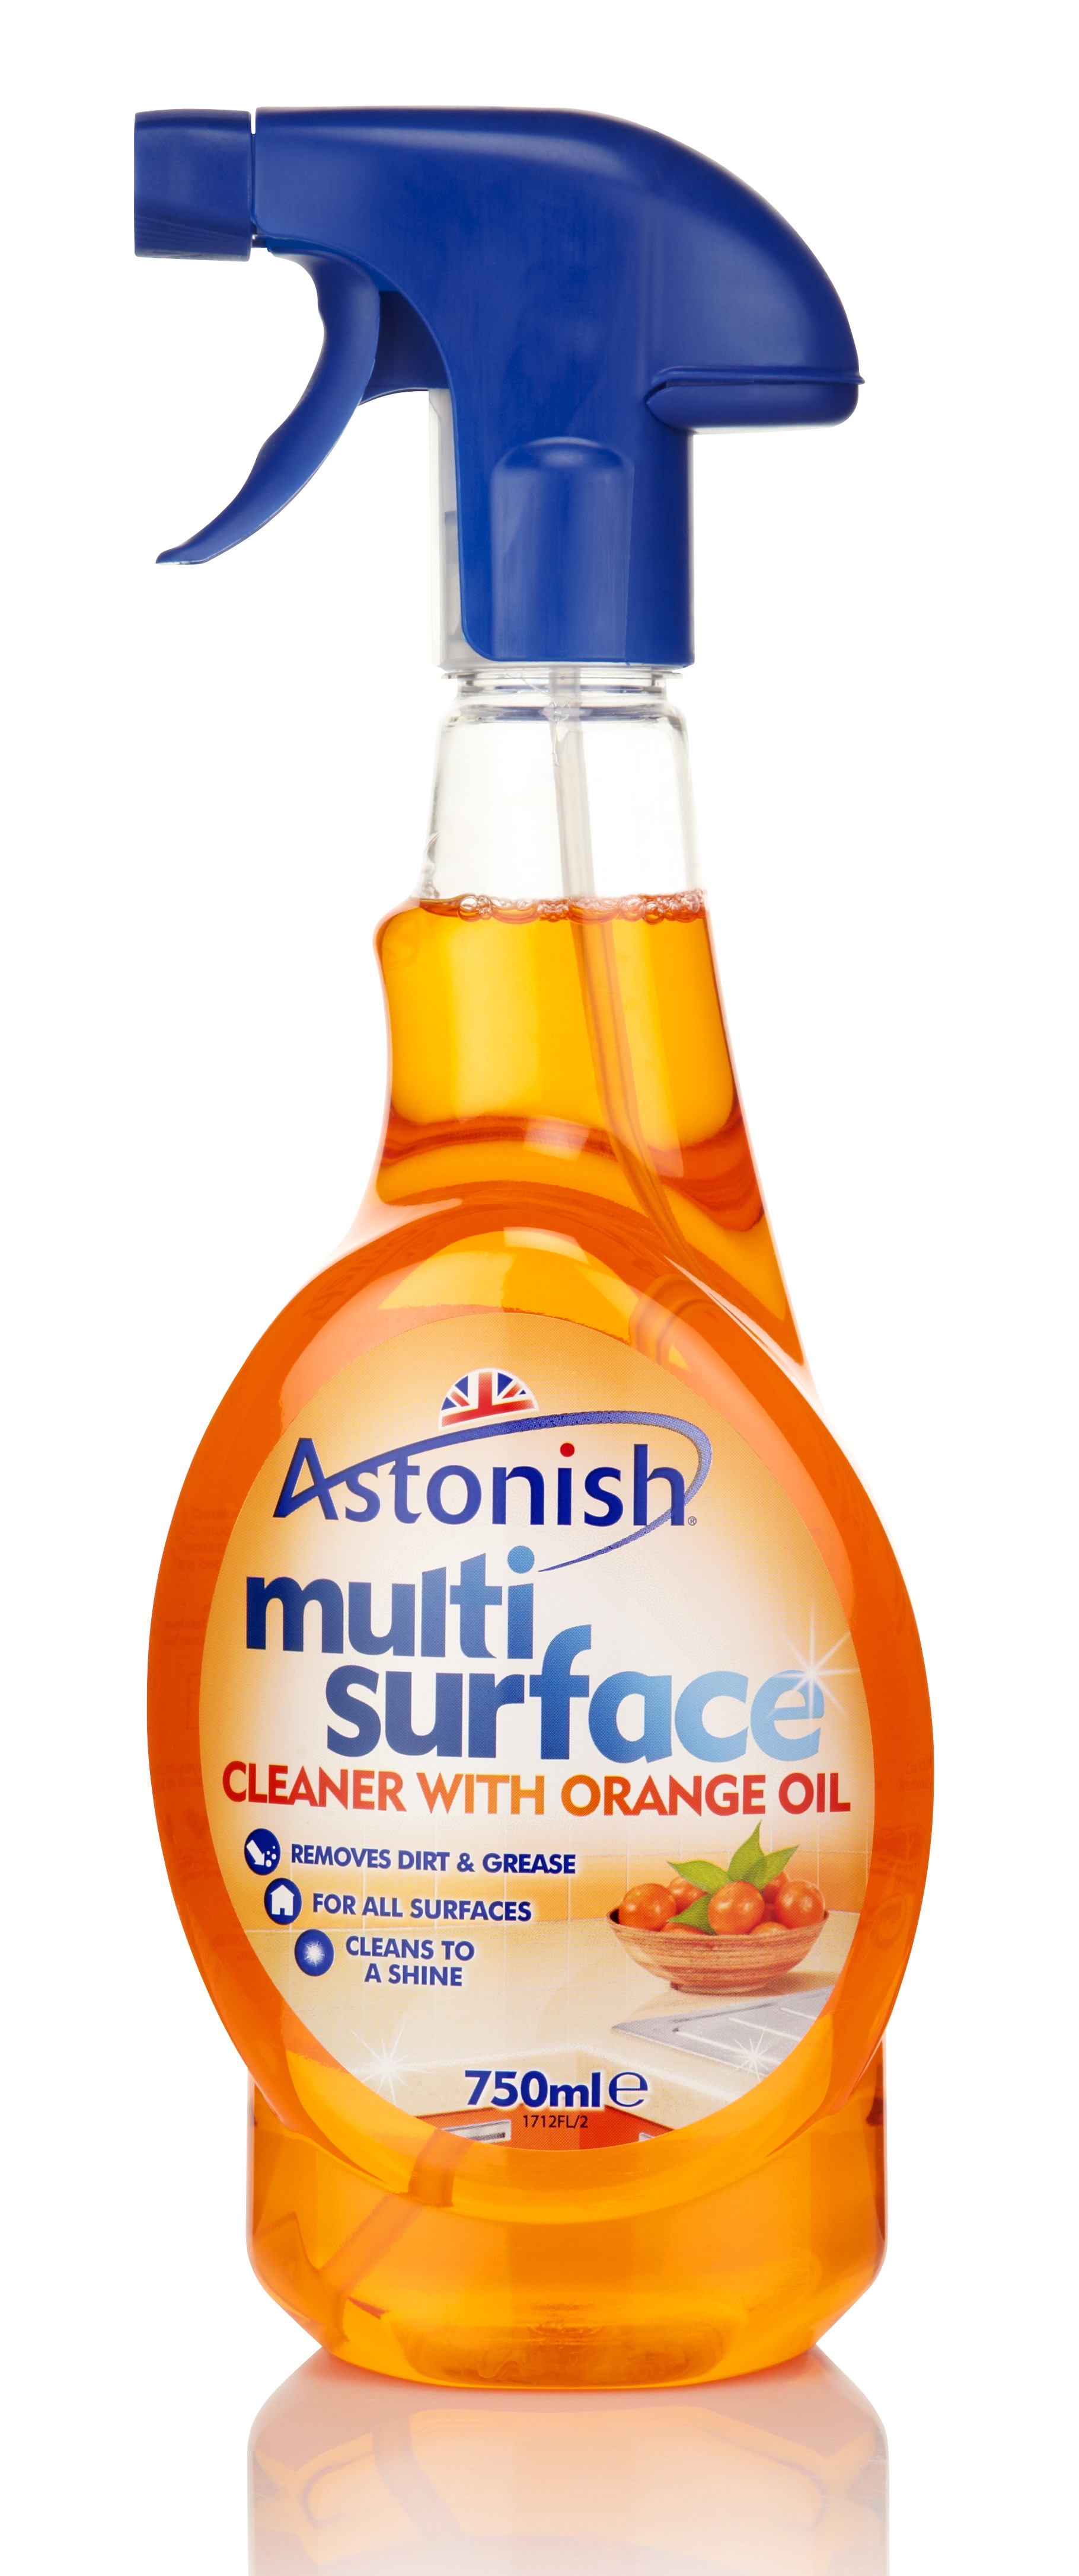 Astonish Multi Surface Cleaner with Orange Oil 750ml.jpg